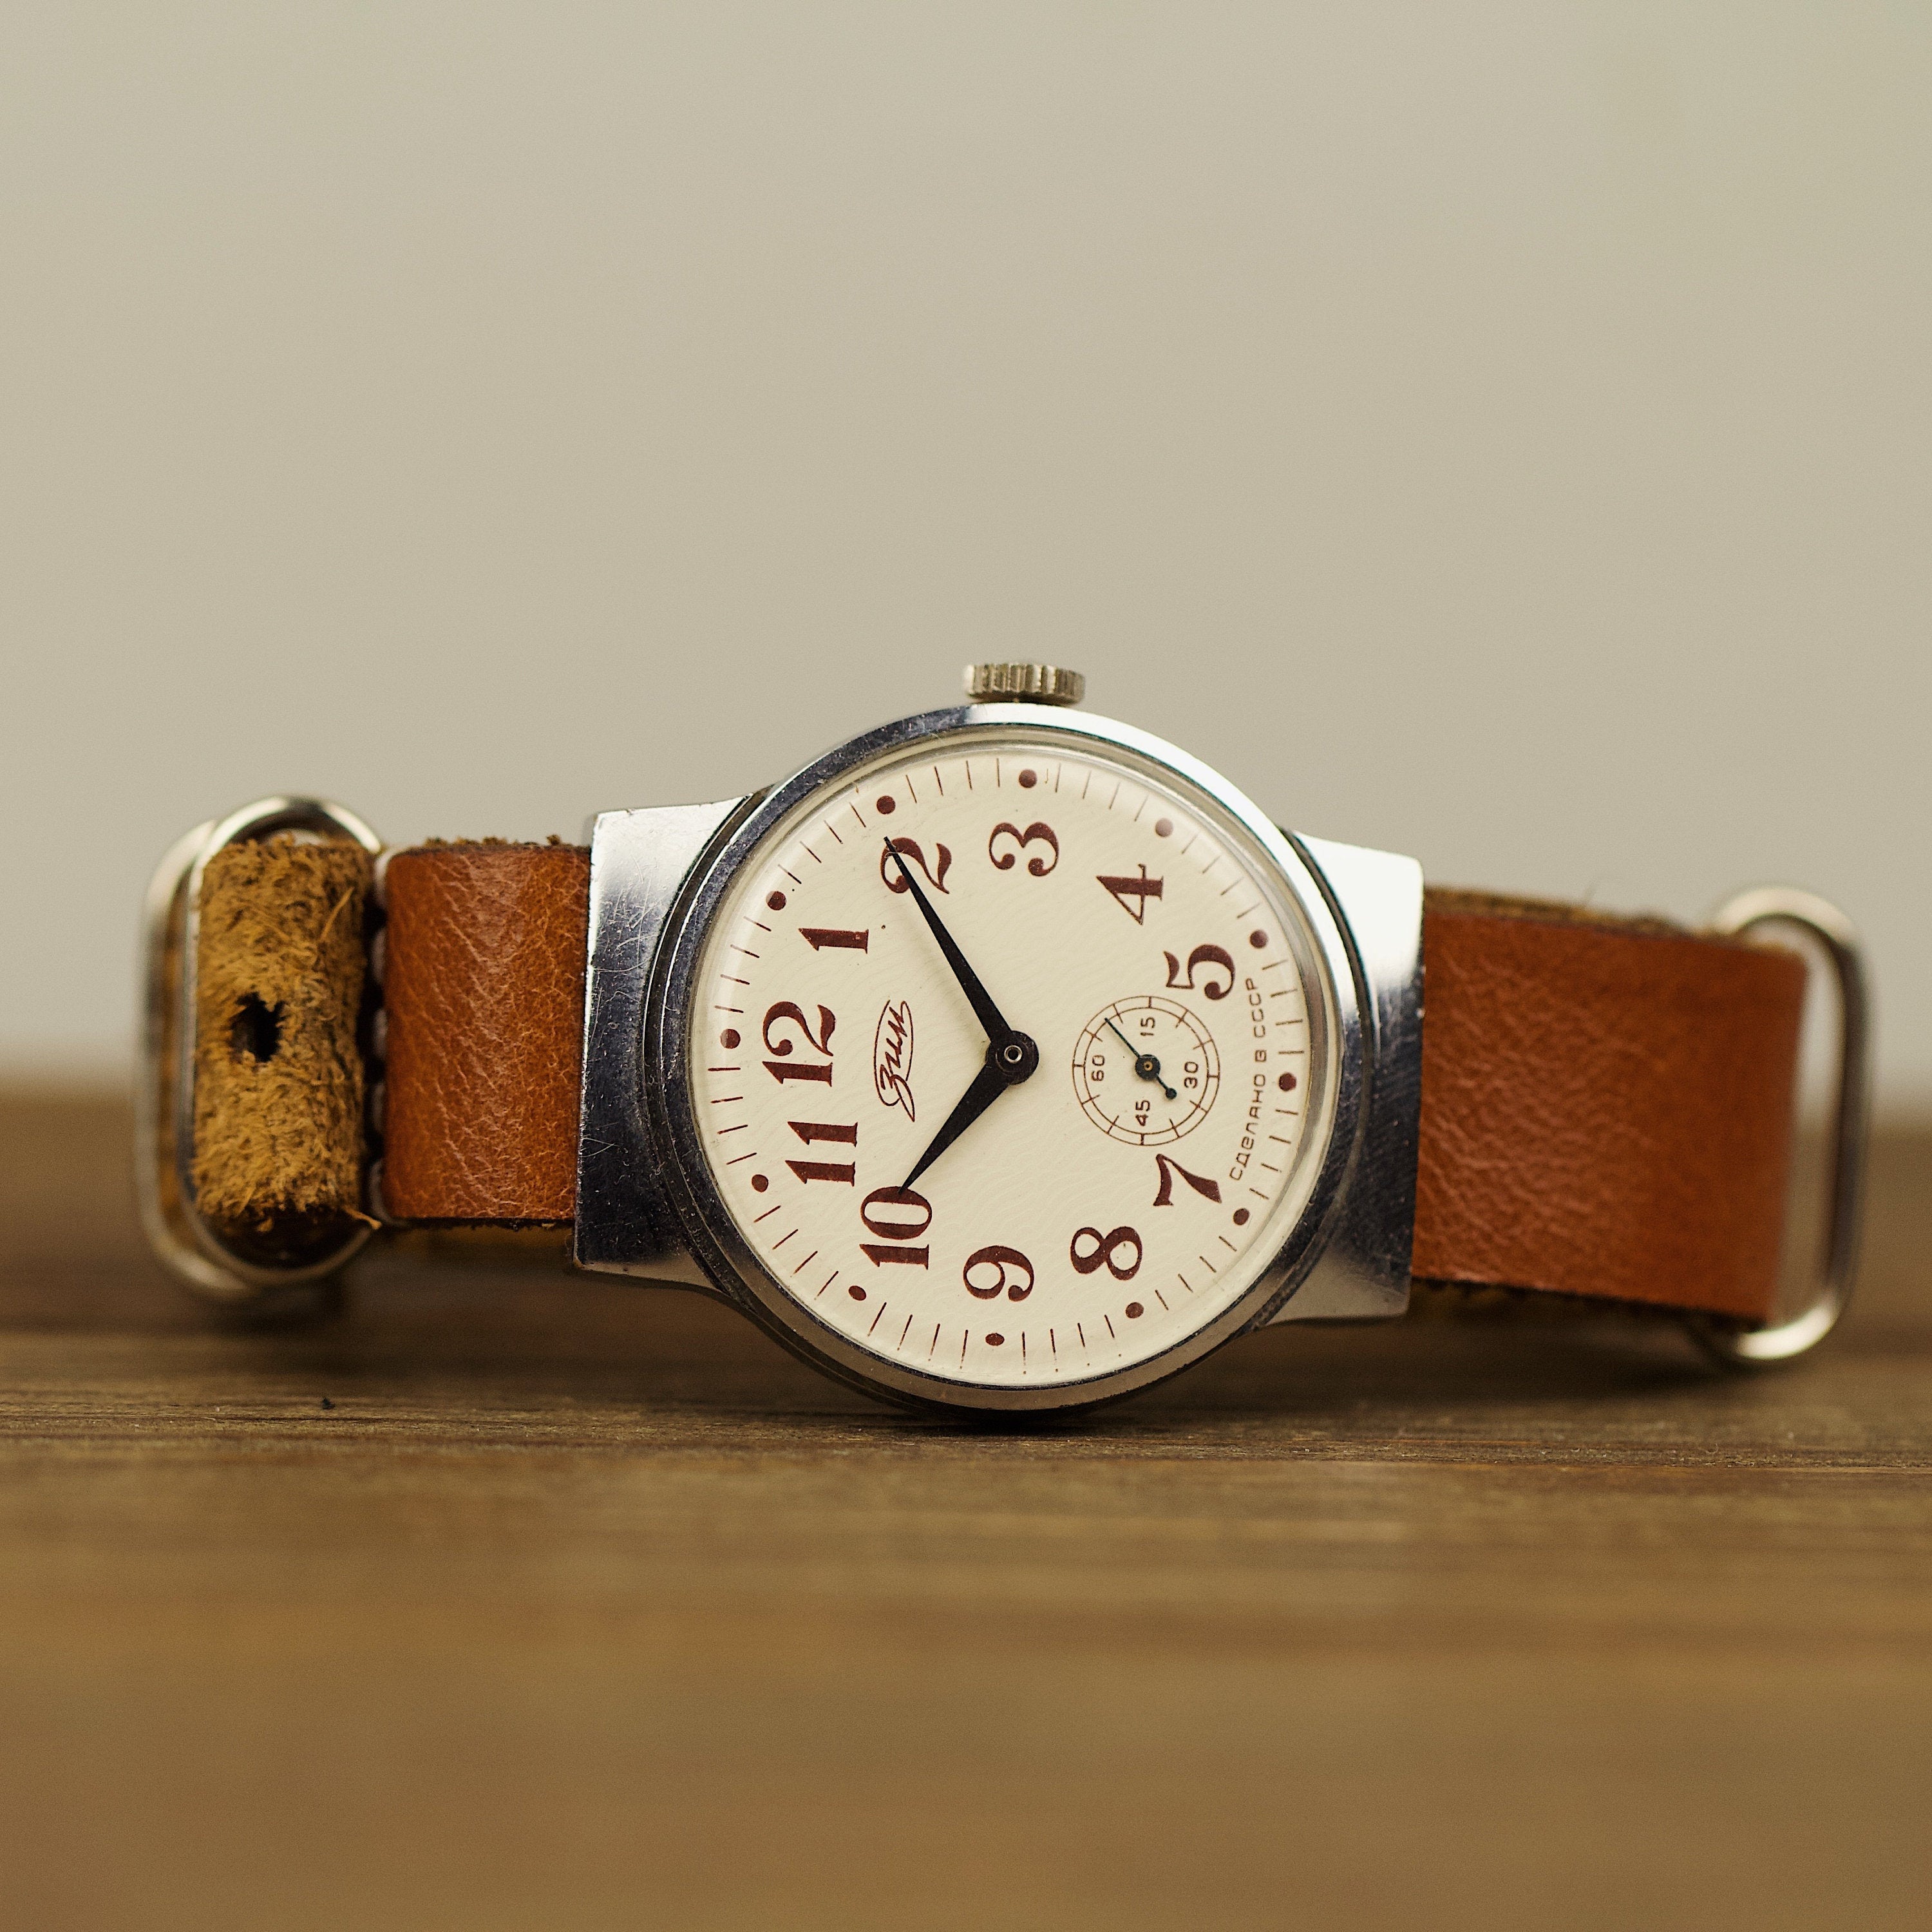 Very rare men's soviet vintage wrist watch Zim with leather nato strap